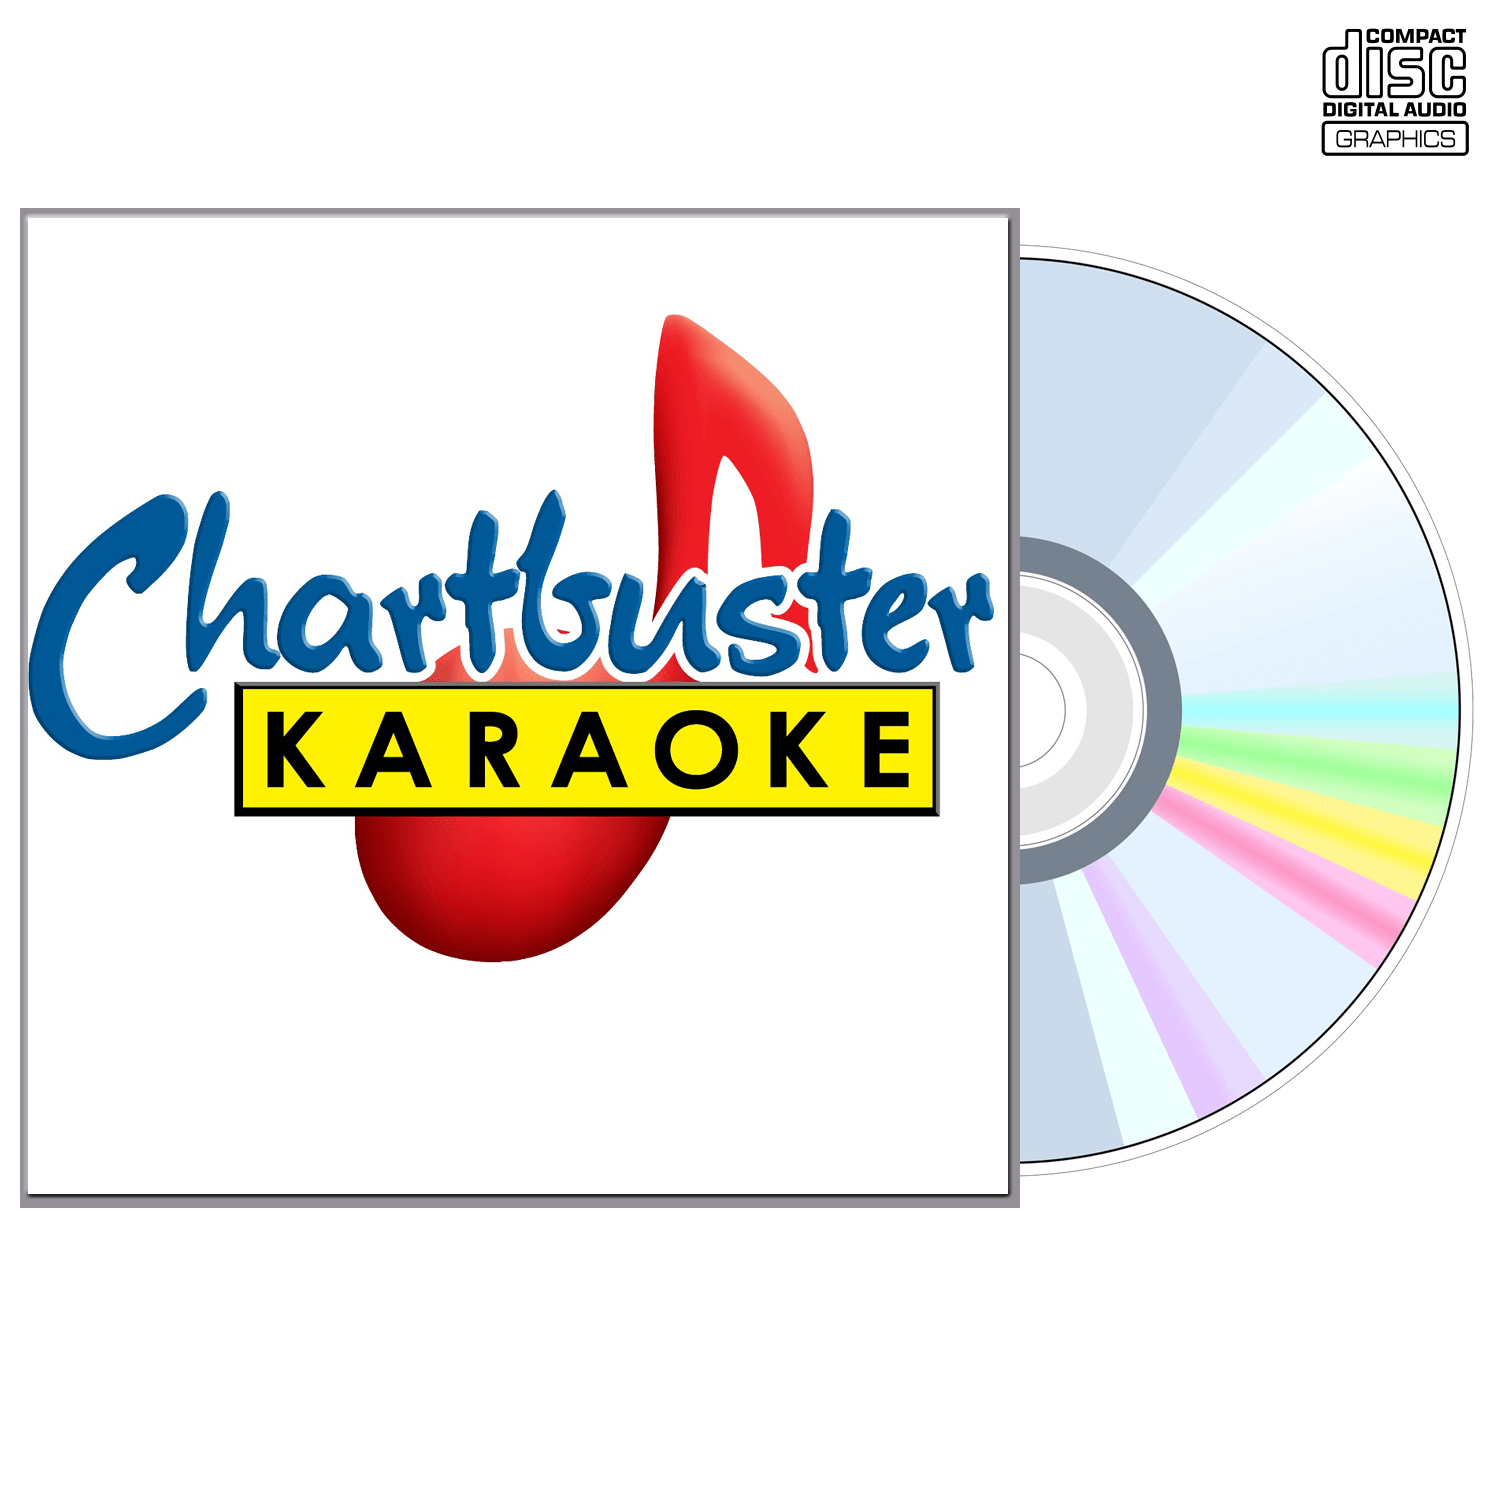 Baillie And The Boys - CD+G - Chartbuster Karaoke - Karaoke Home Entertainment